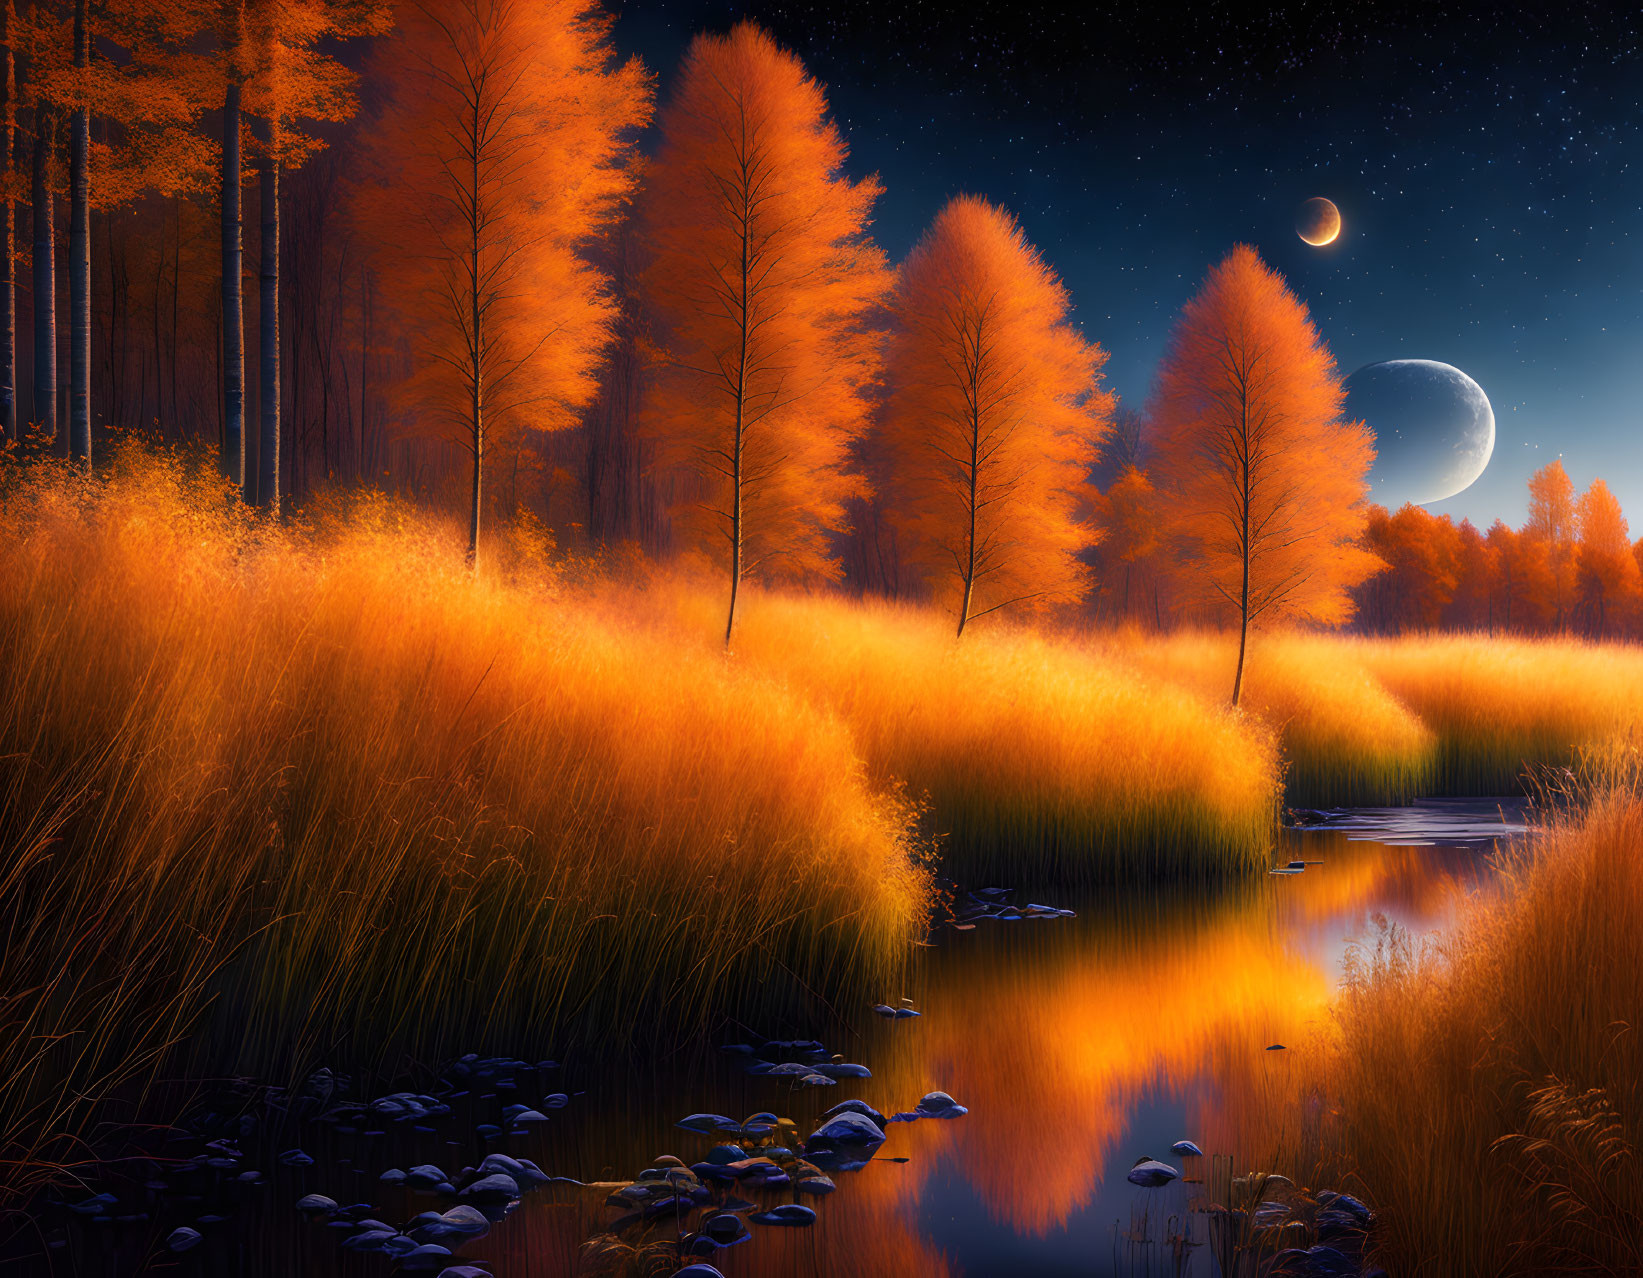 Autumnal scene: Orange trees, river, starry night sky